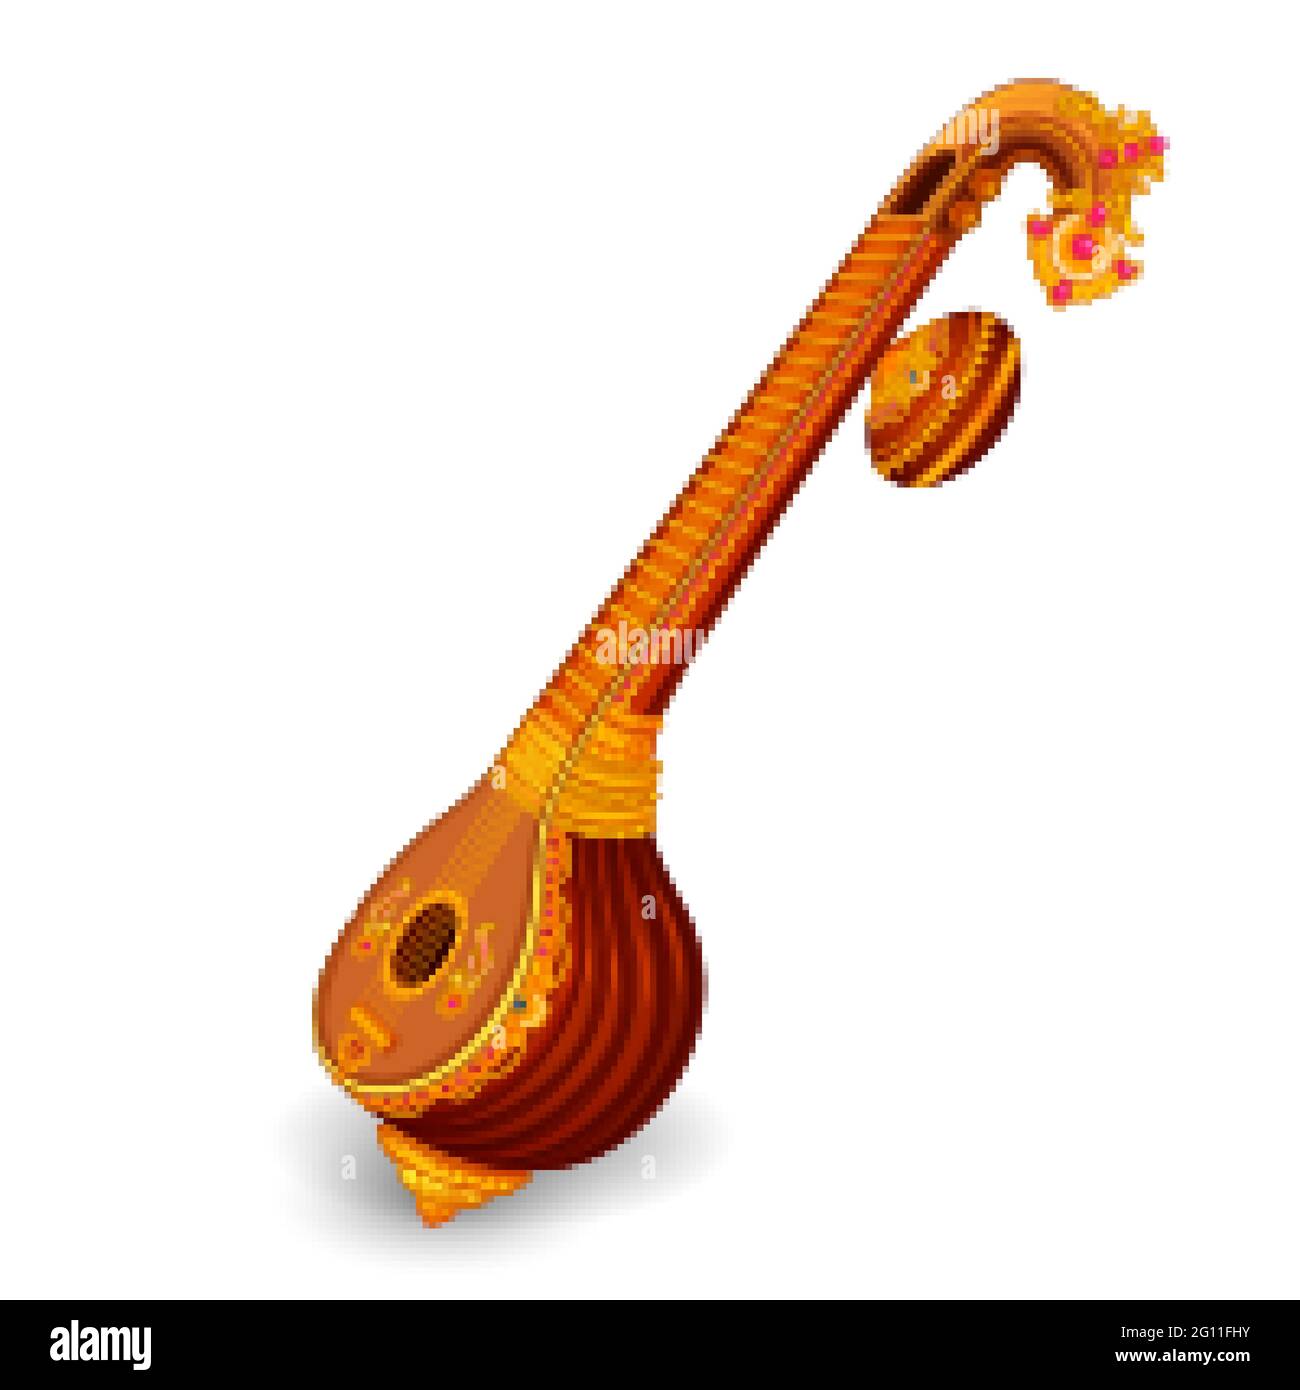 hindu musical instruments